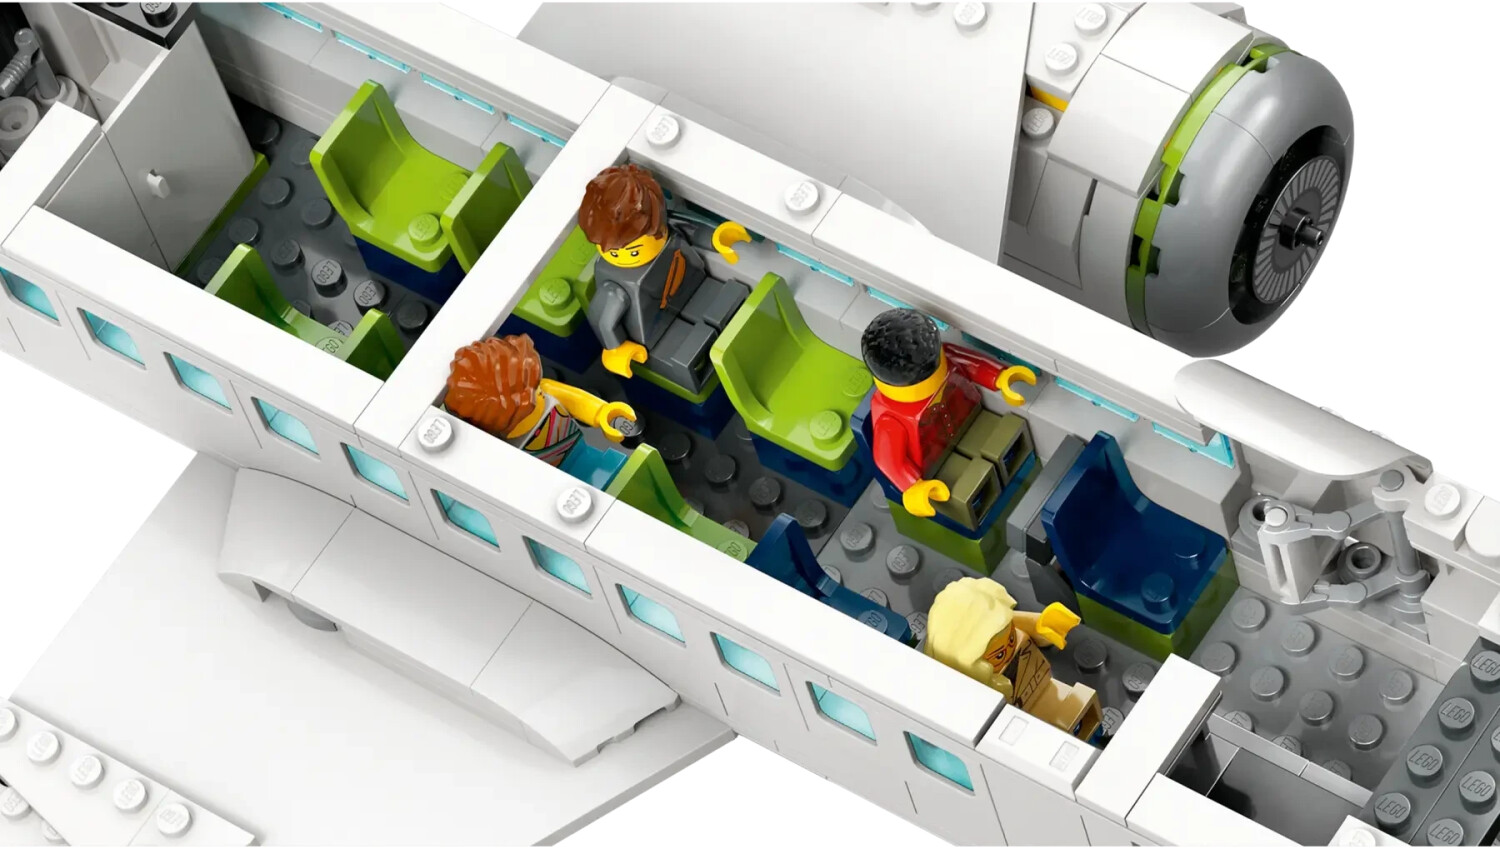 Avion de ligne Lego City pas cher